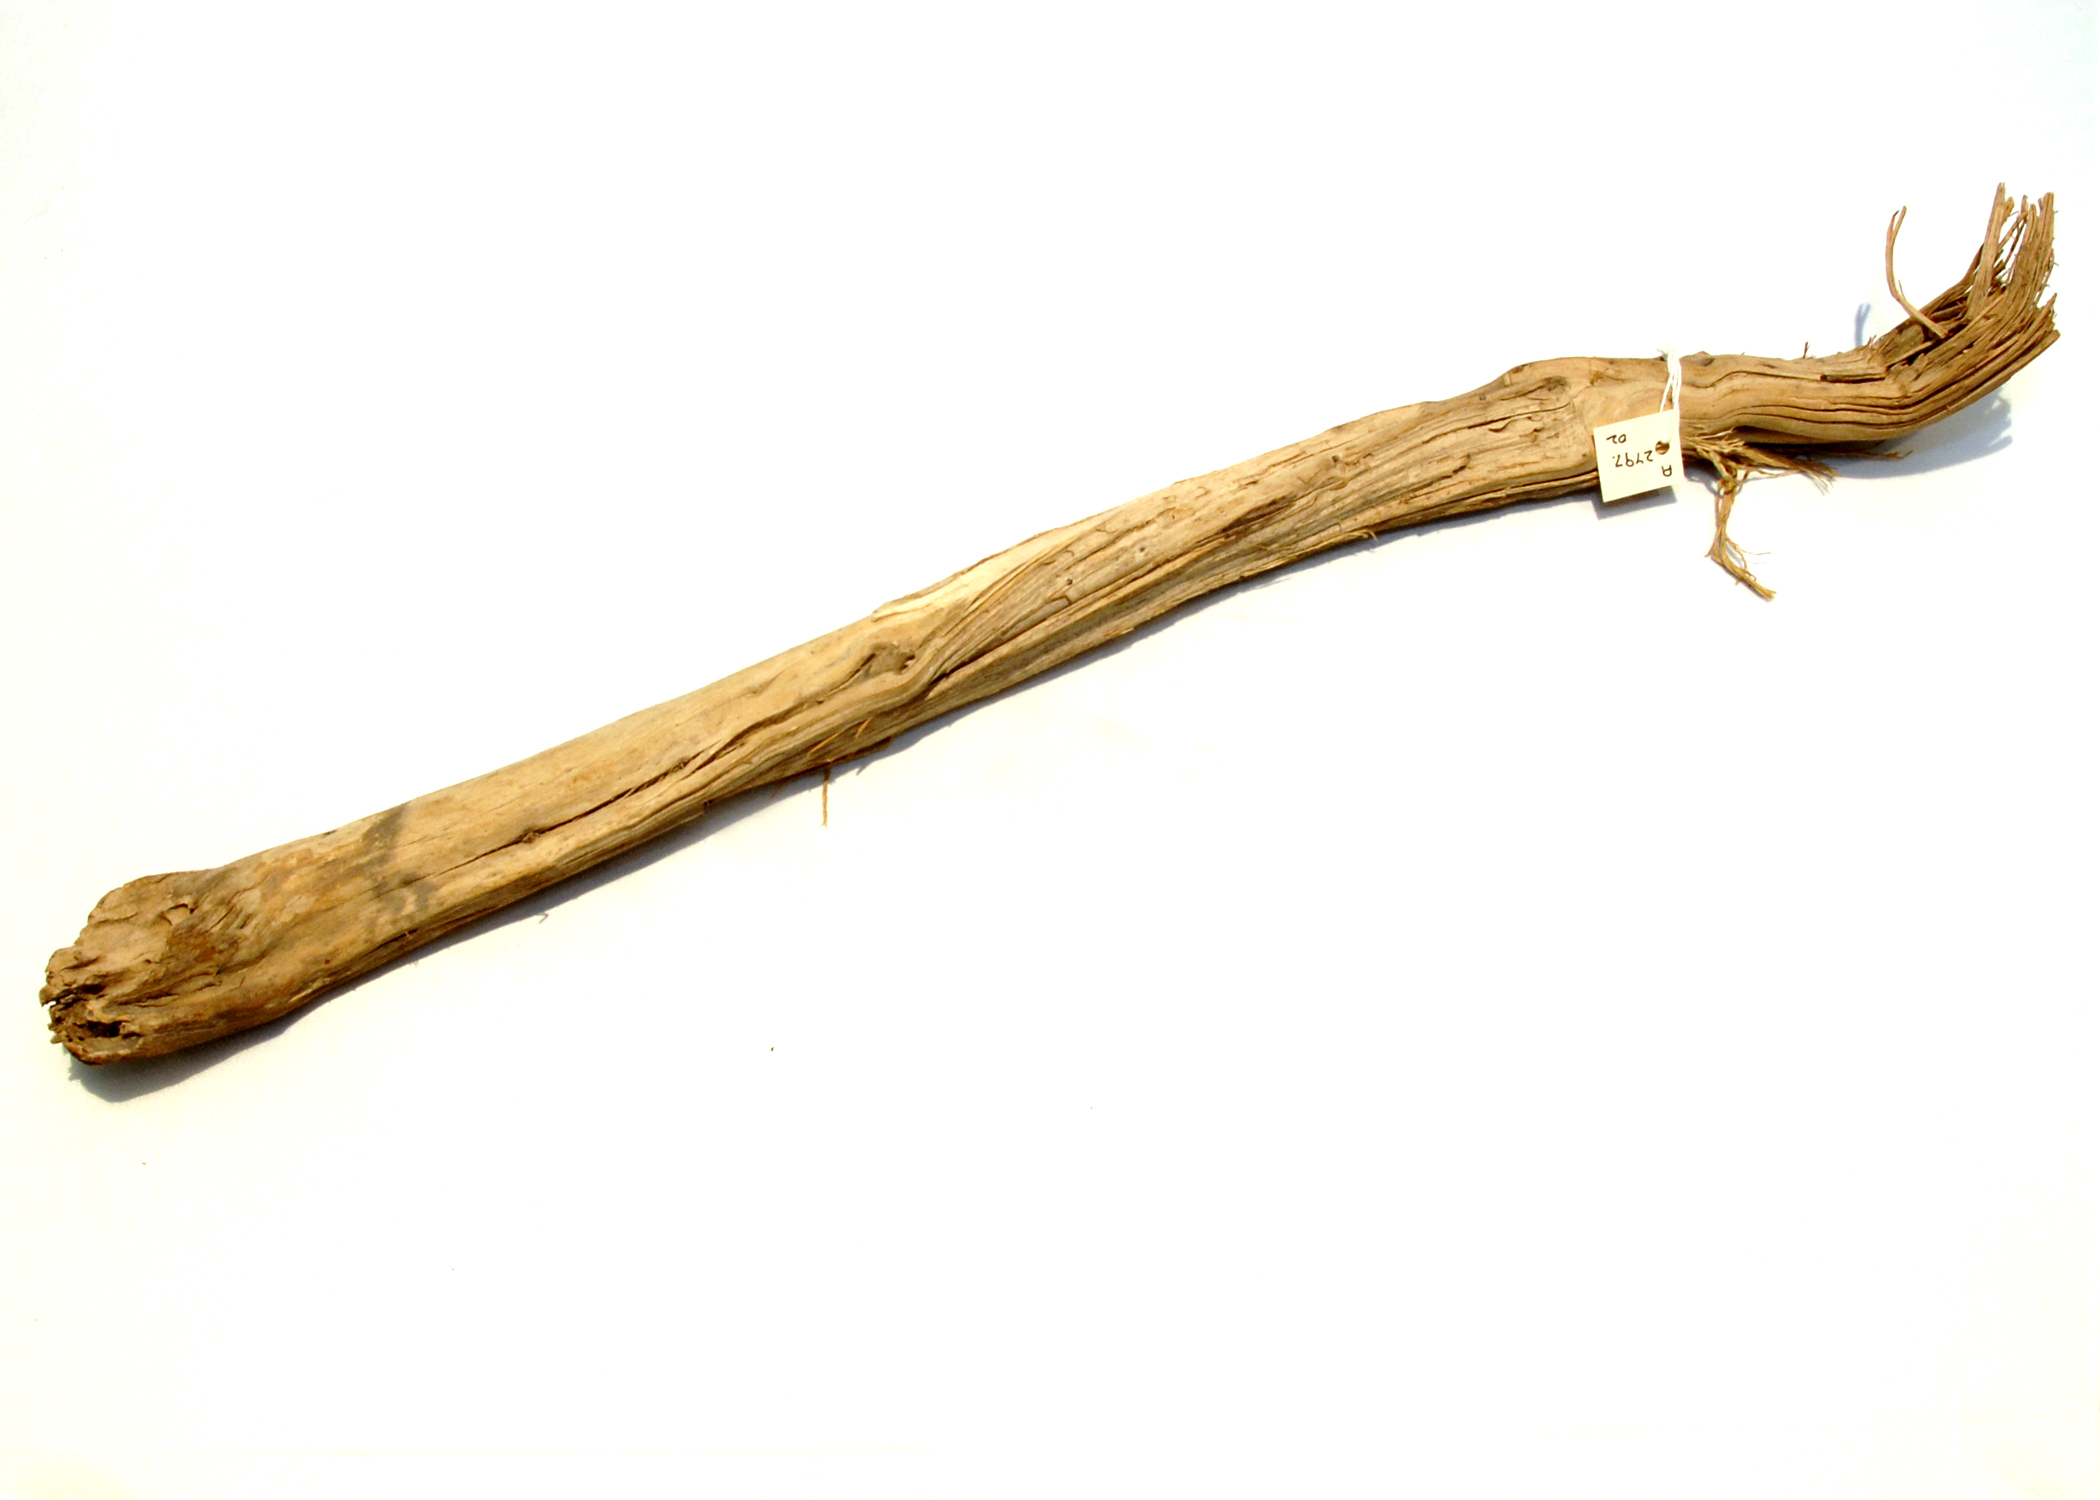 A wooden stick. Палка деревянная. Старая деревянная палка. Палка деревянная от дерева. Ребенок с палкой.